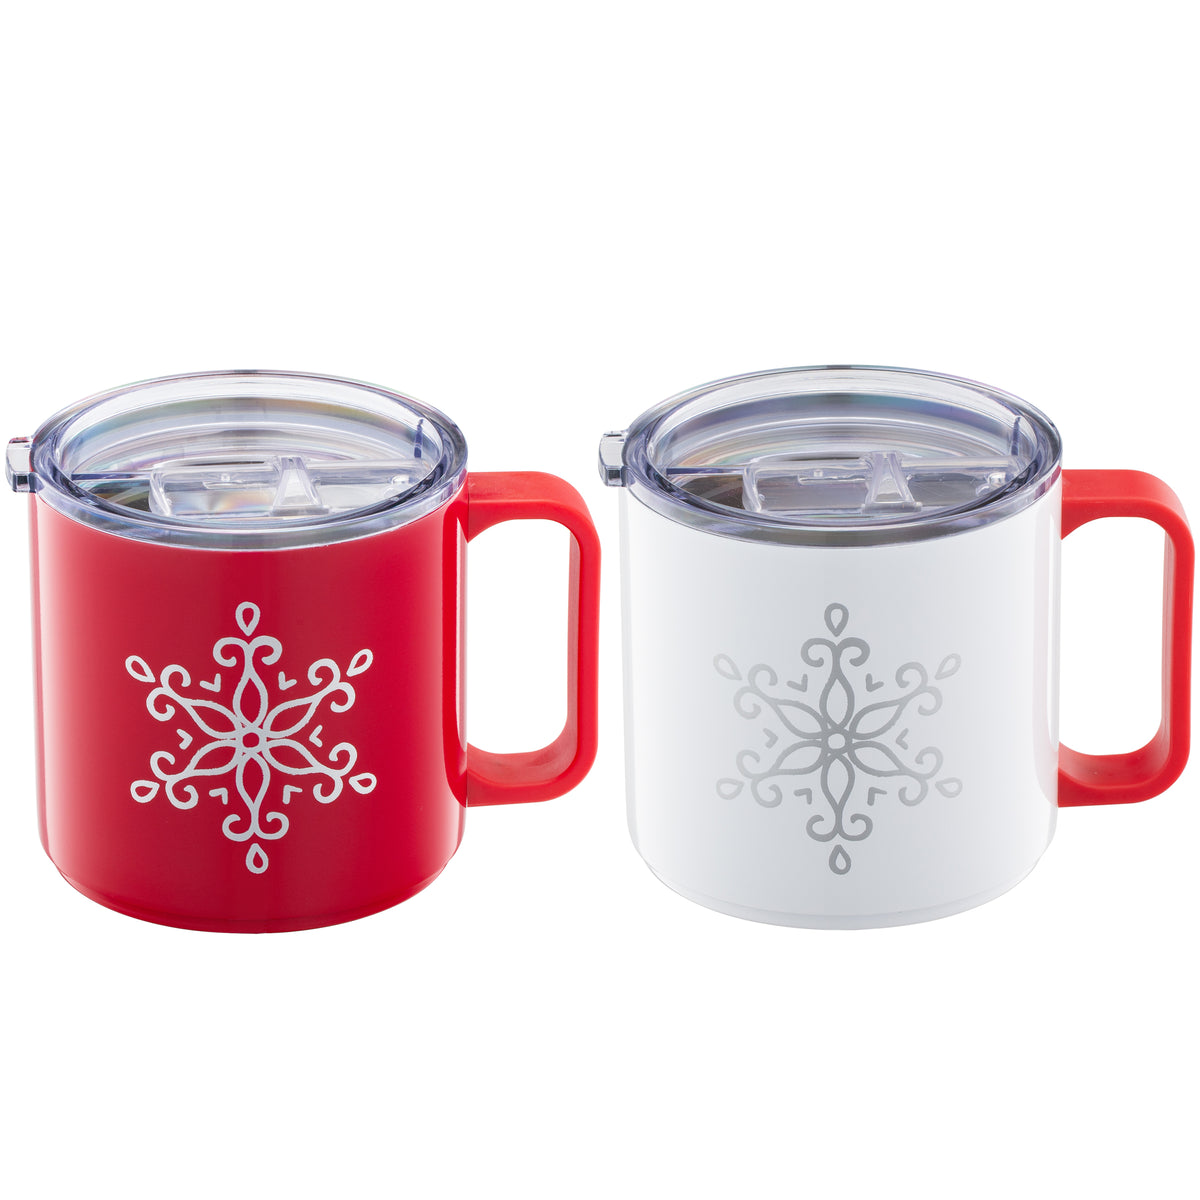 Snowflake Kisses Cuddle Mugs - Set of 2